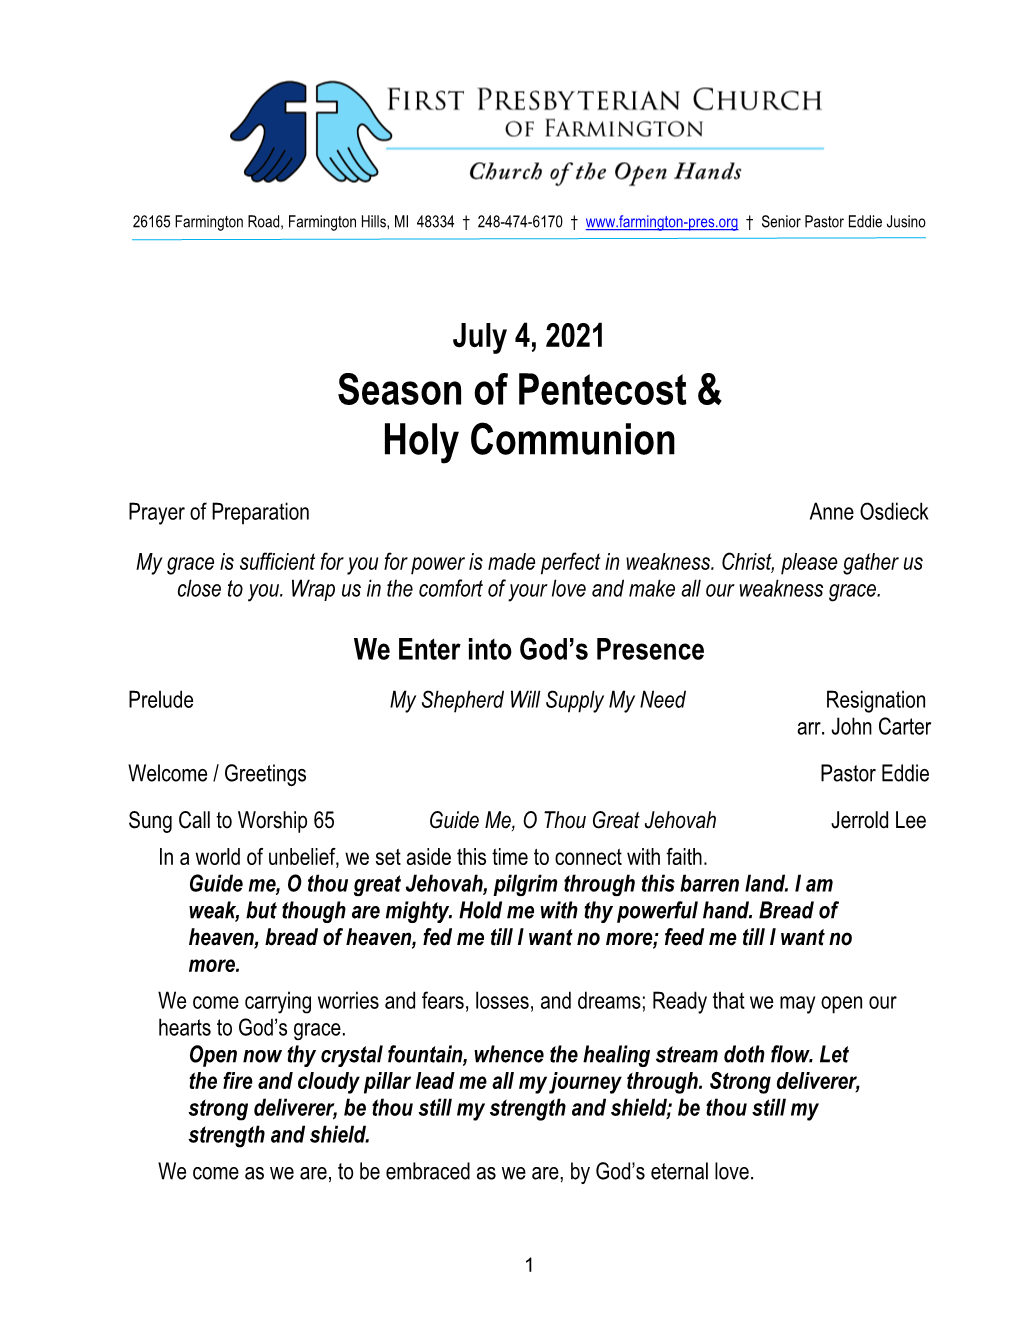 Season of Pentecost & Holy Communion